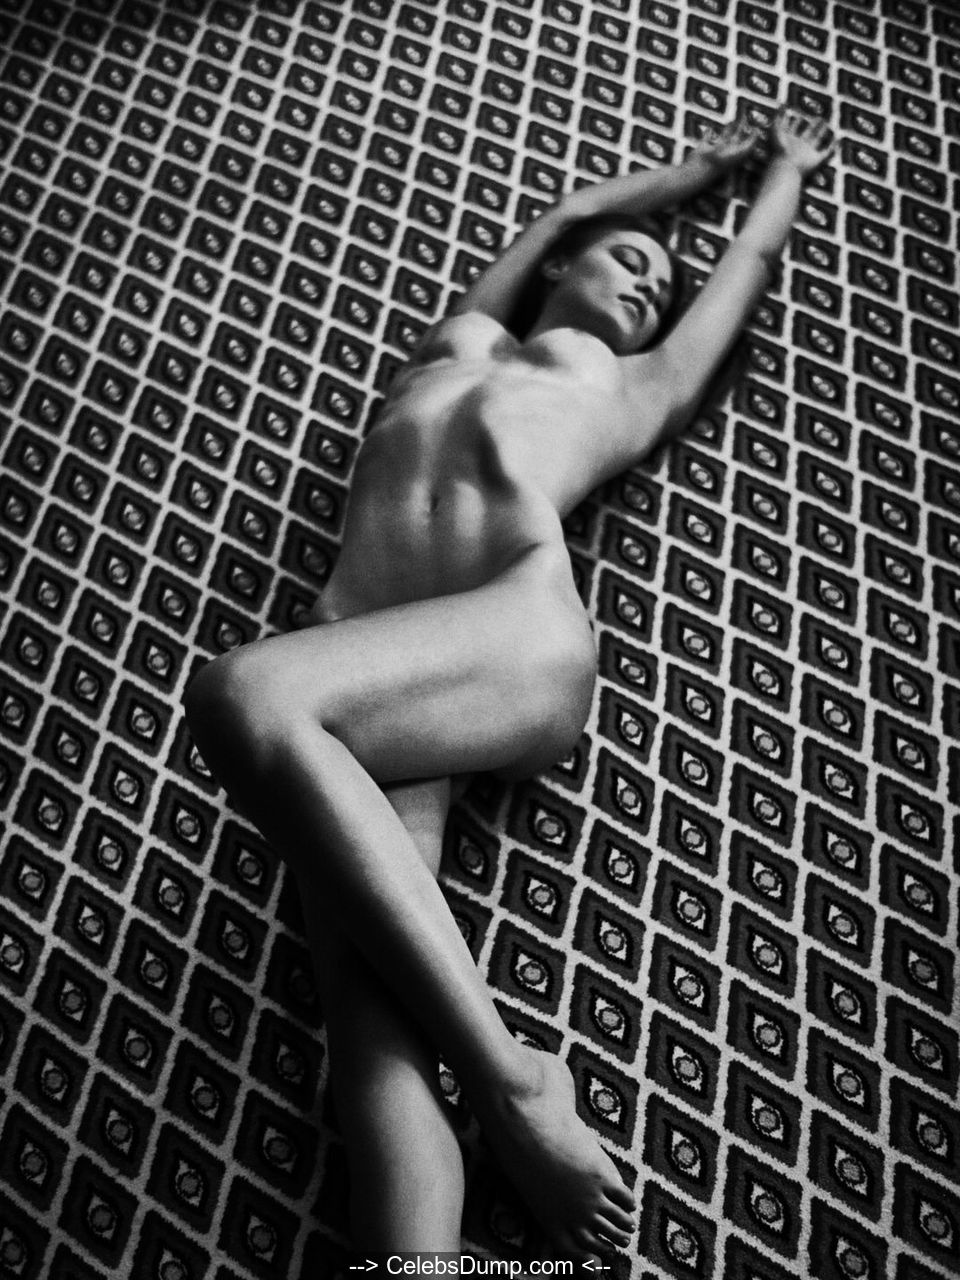 Fernanda Liz nude at Hotel Room photoshoot by Will Vendramini 2016.